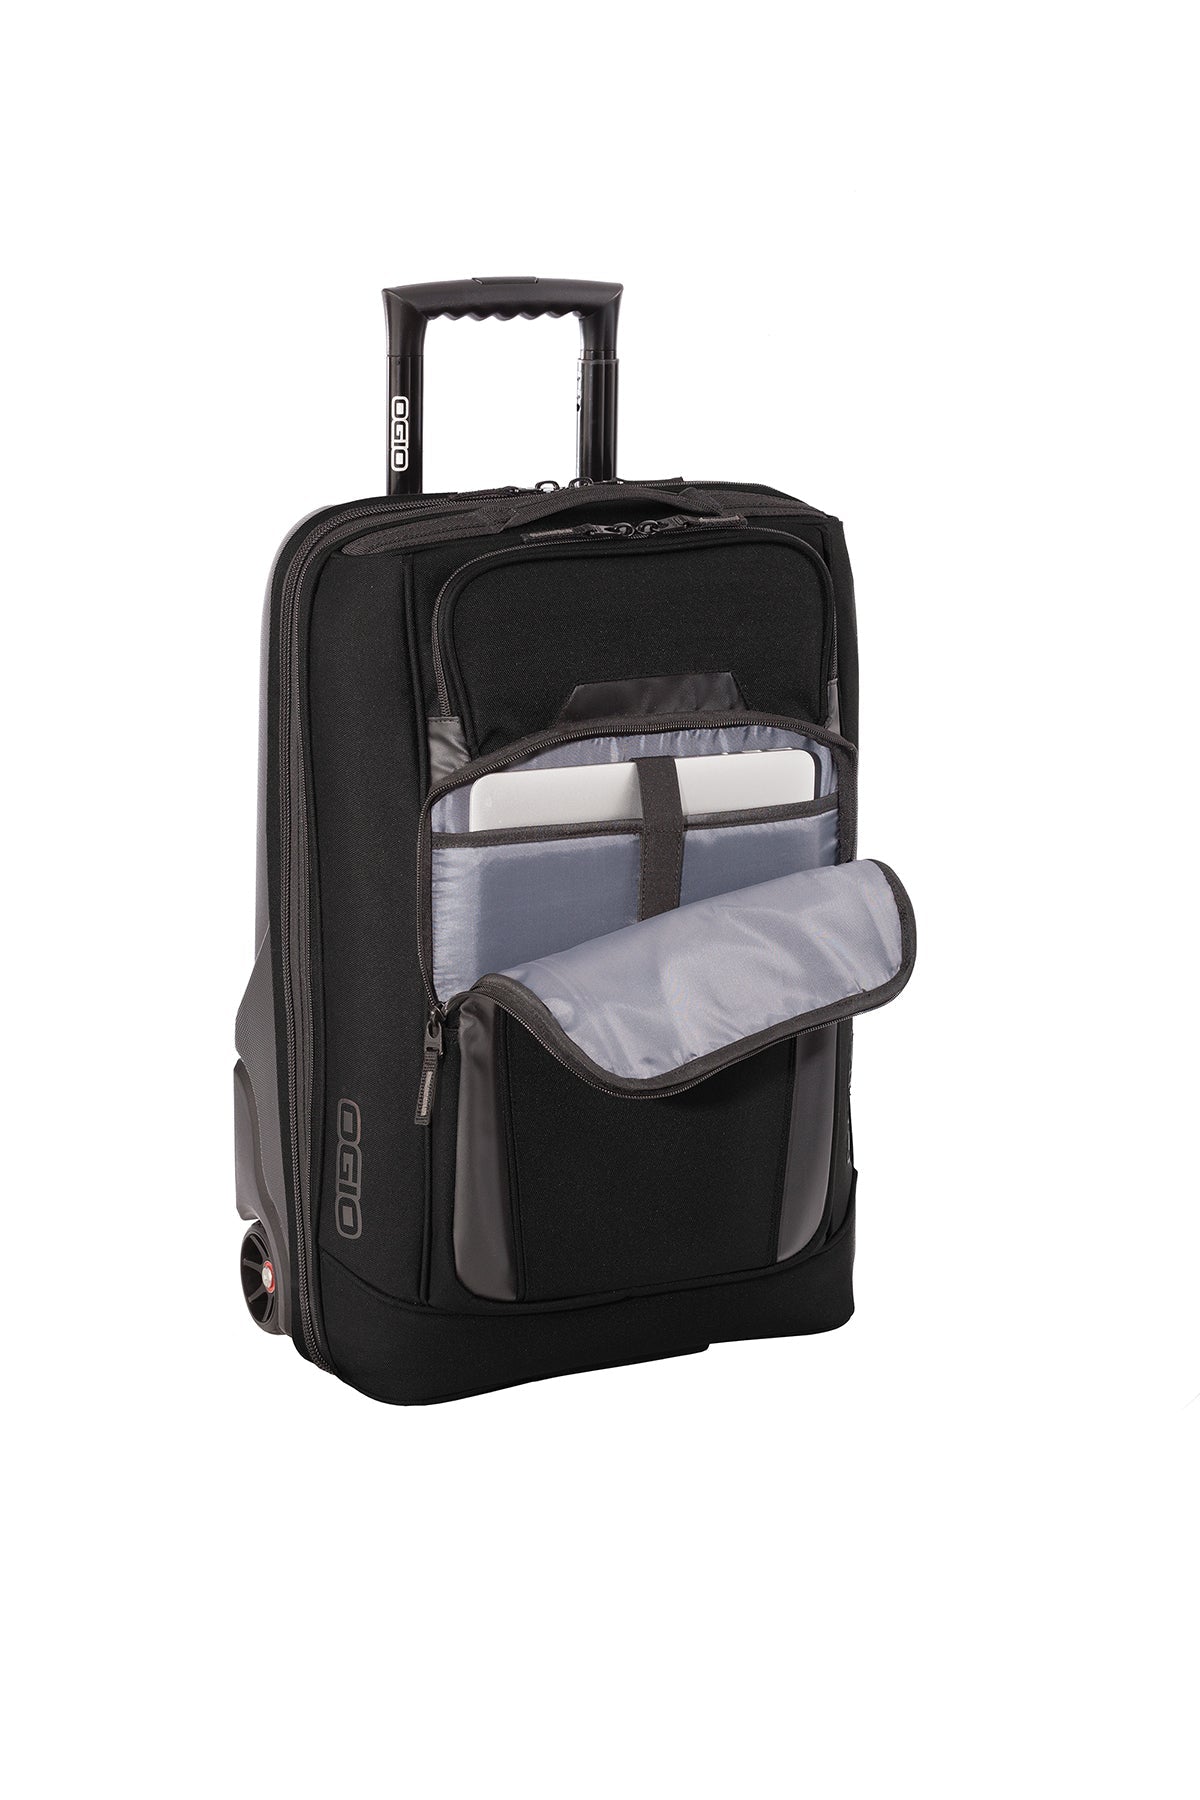 OGIO Nomad 22 Custom Travel Bags, Black